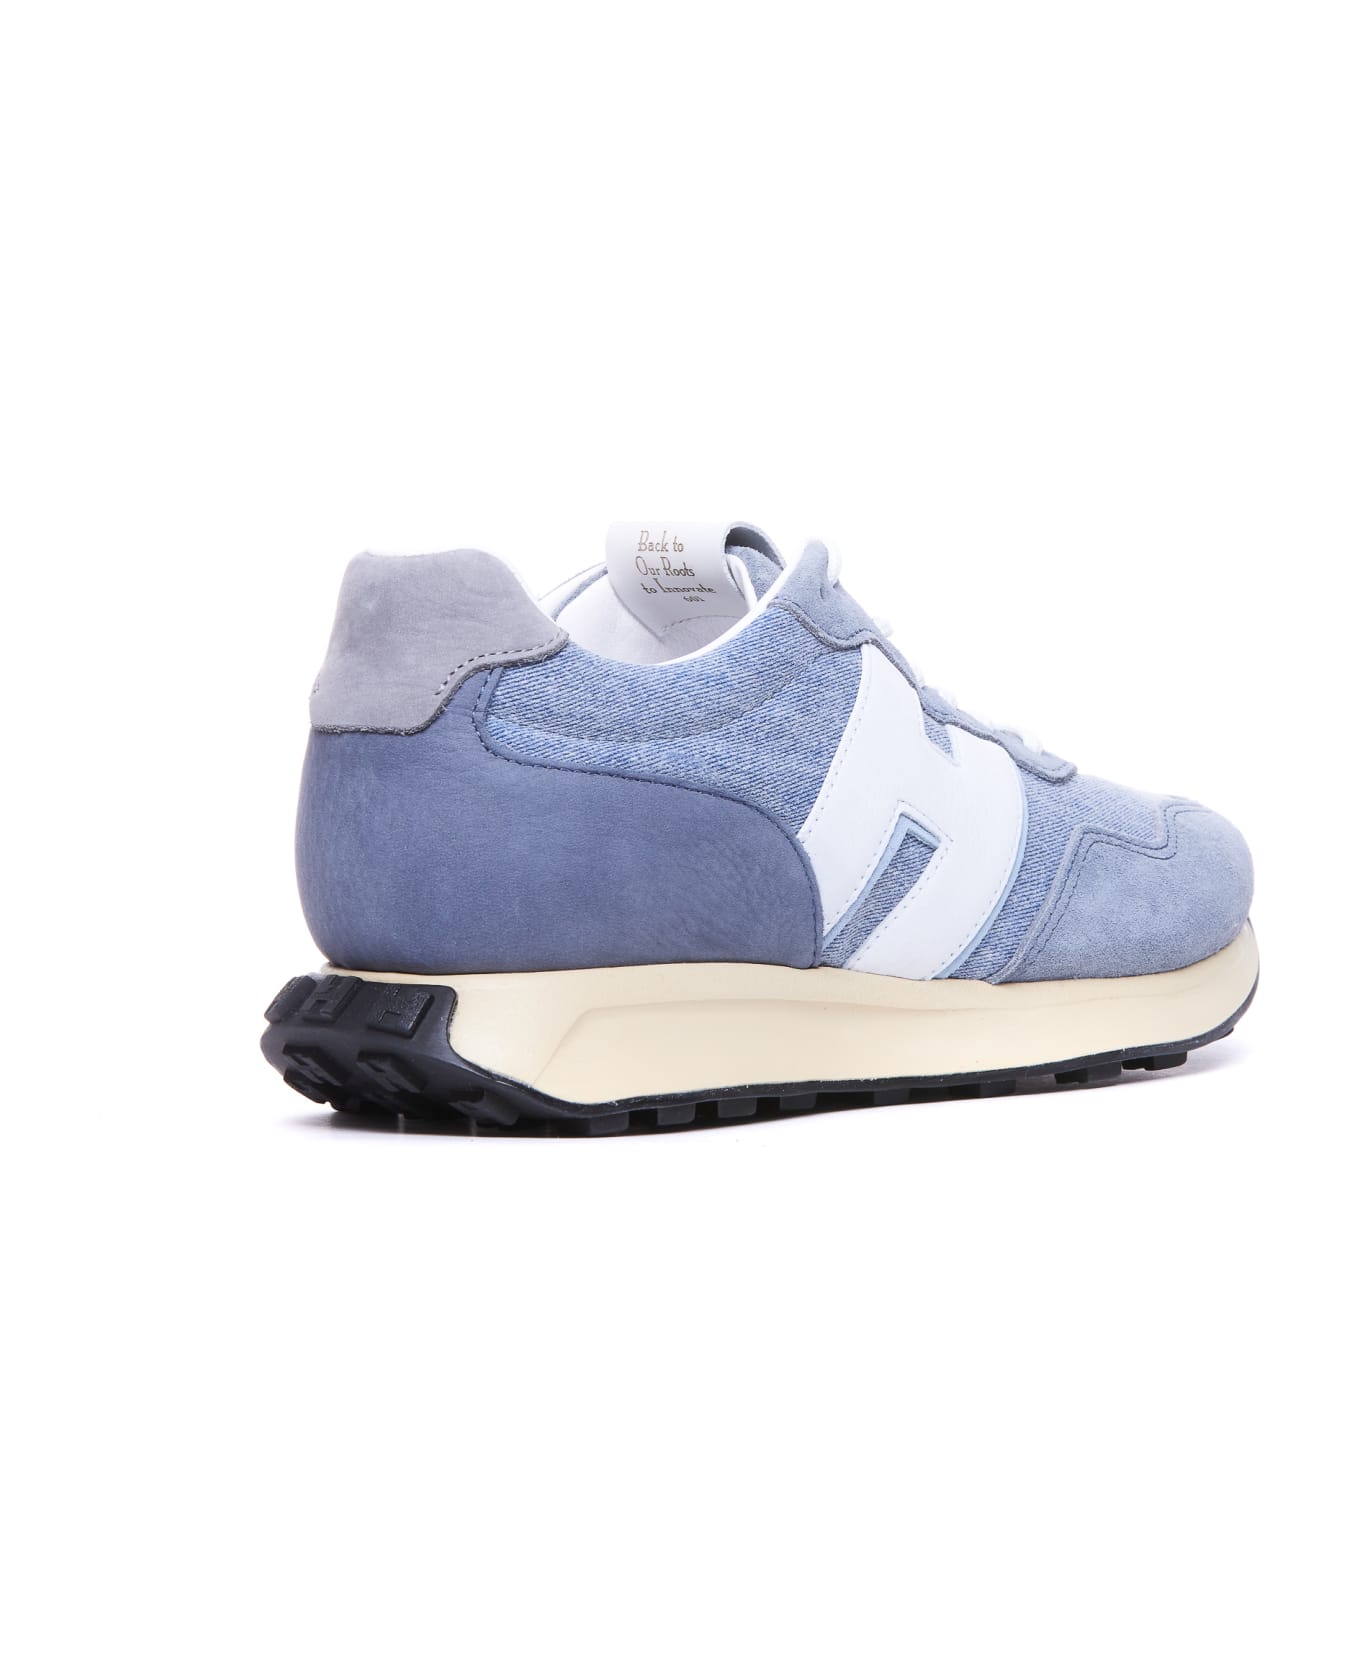 Hogan H601 Sneakers - Blue